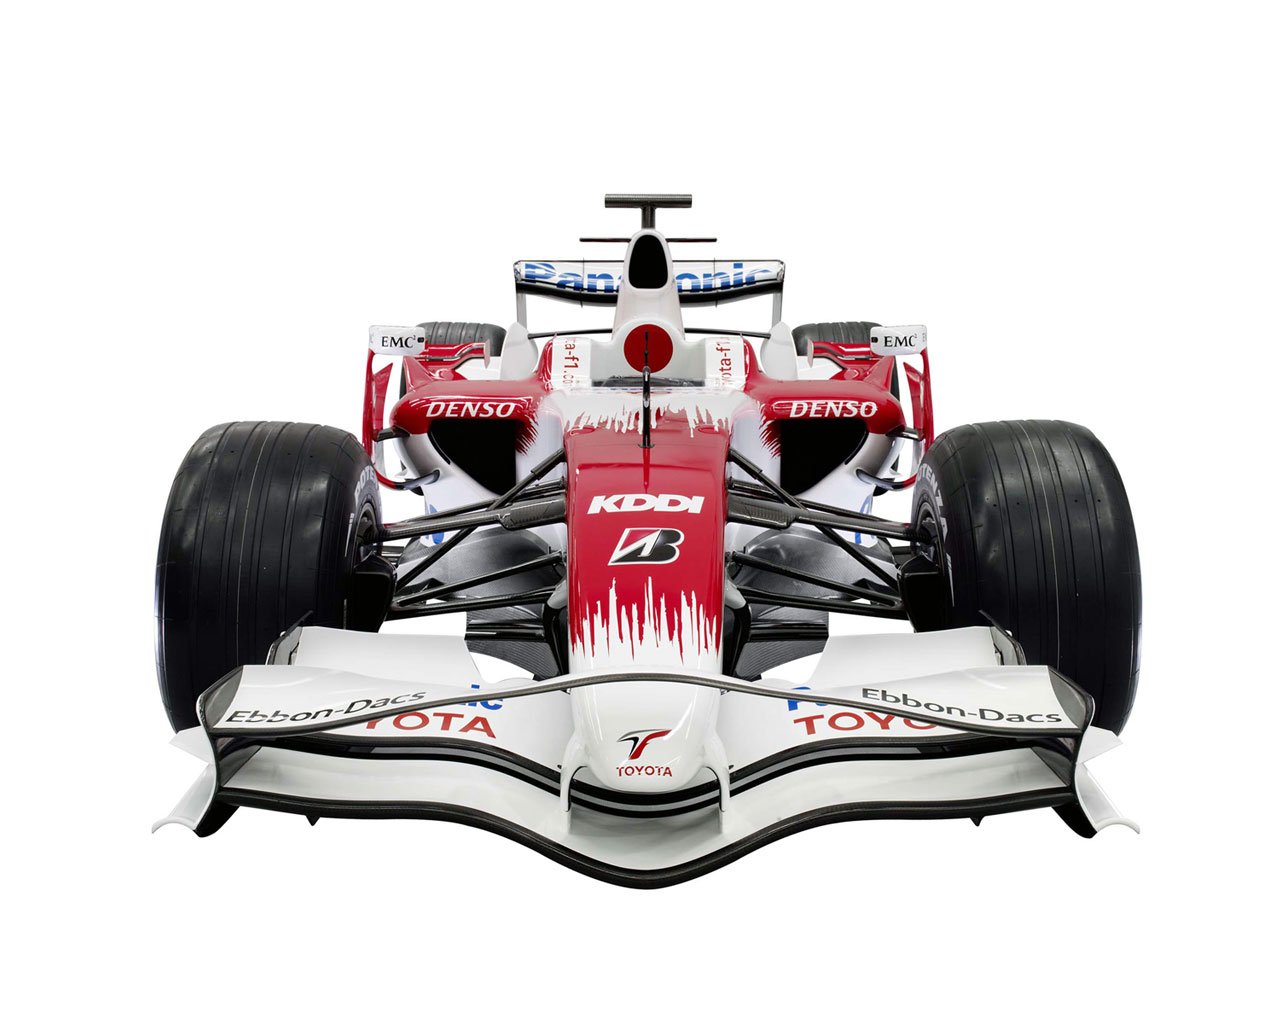 2008 F1 CARS